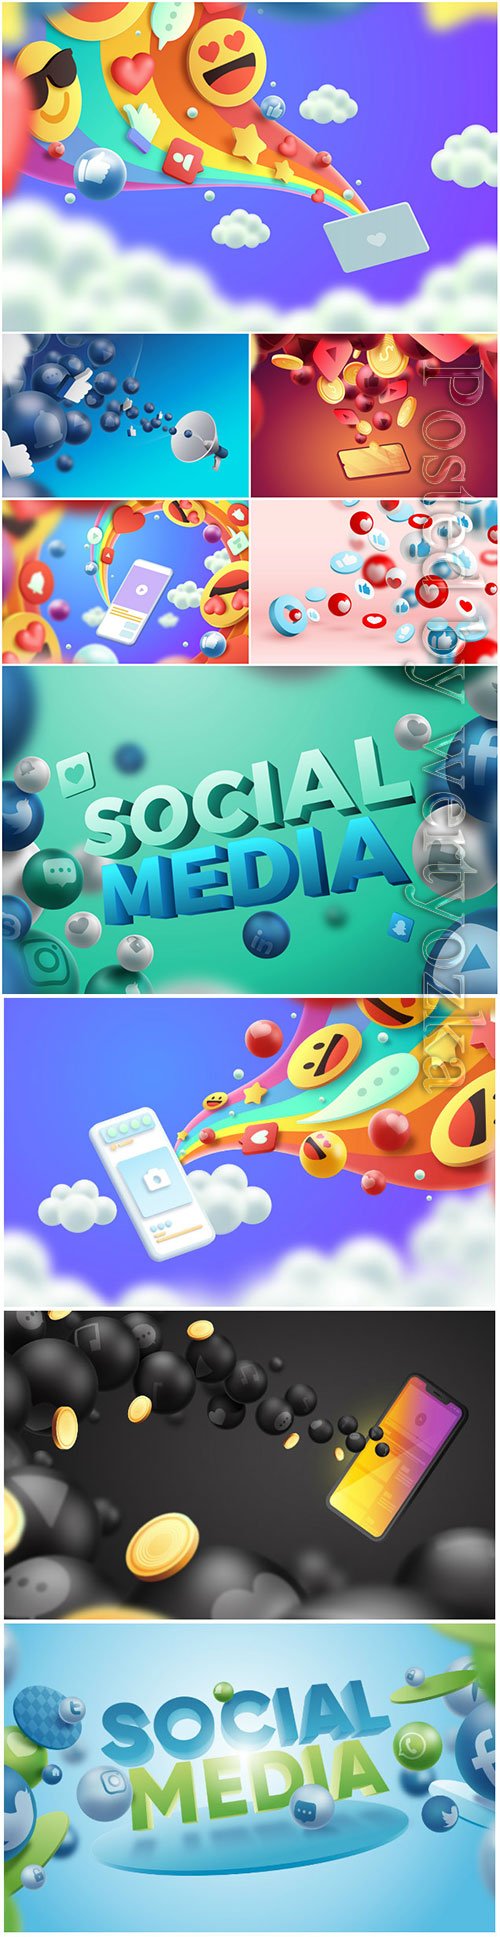 Social media 3d vector background